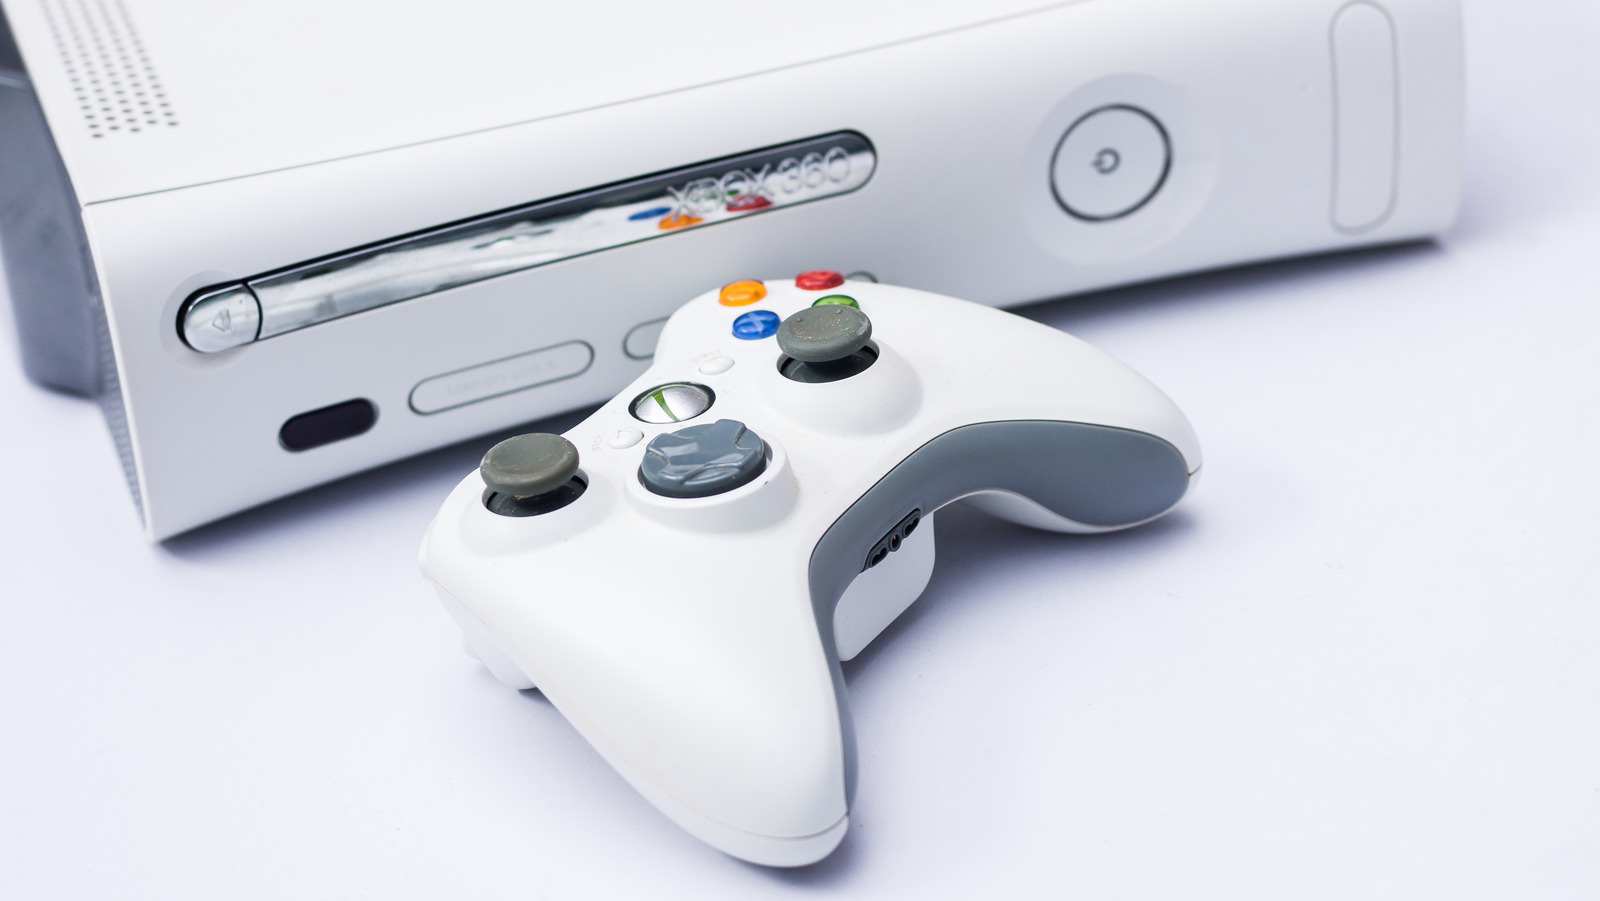 10 Forgotten Xbox 360 Features That Are Pure Nostalgia